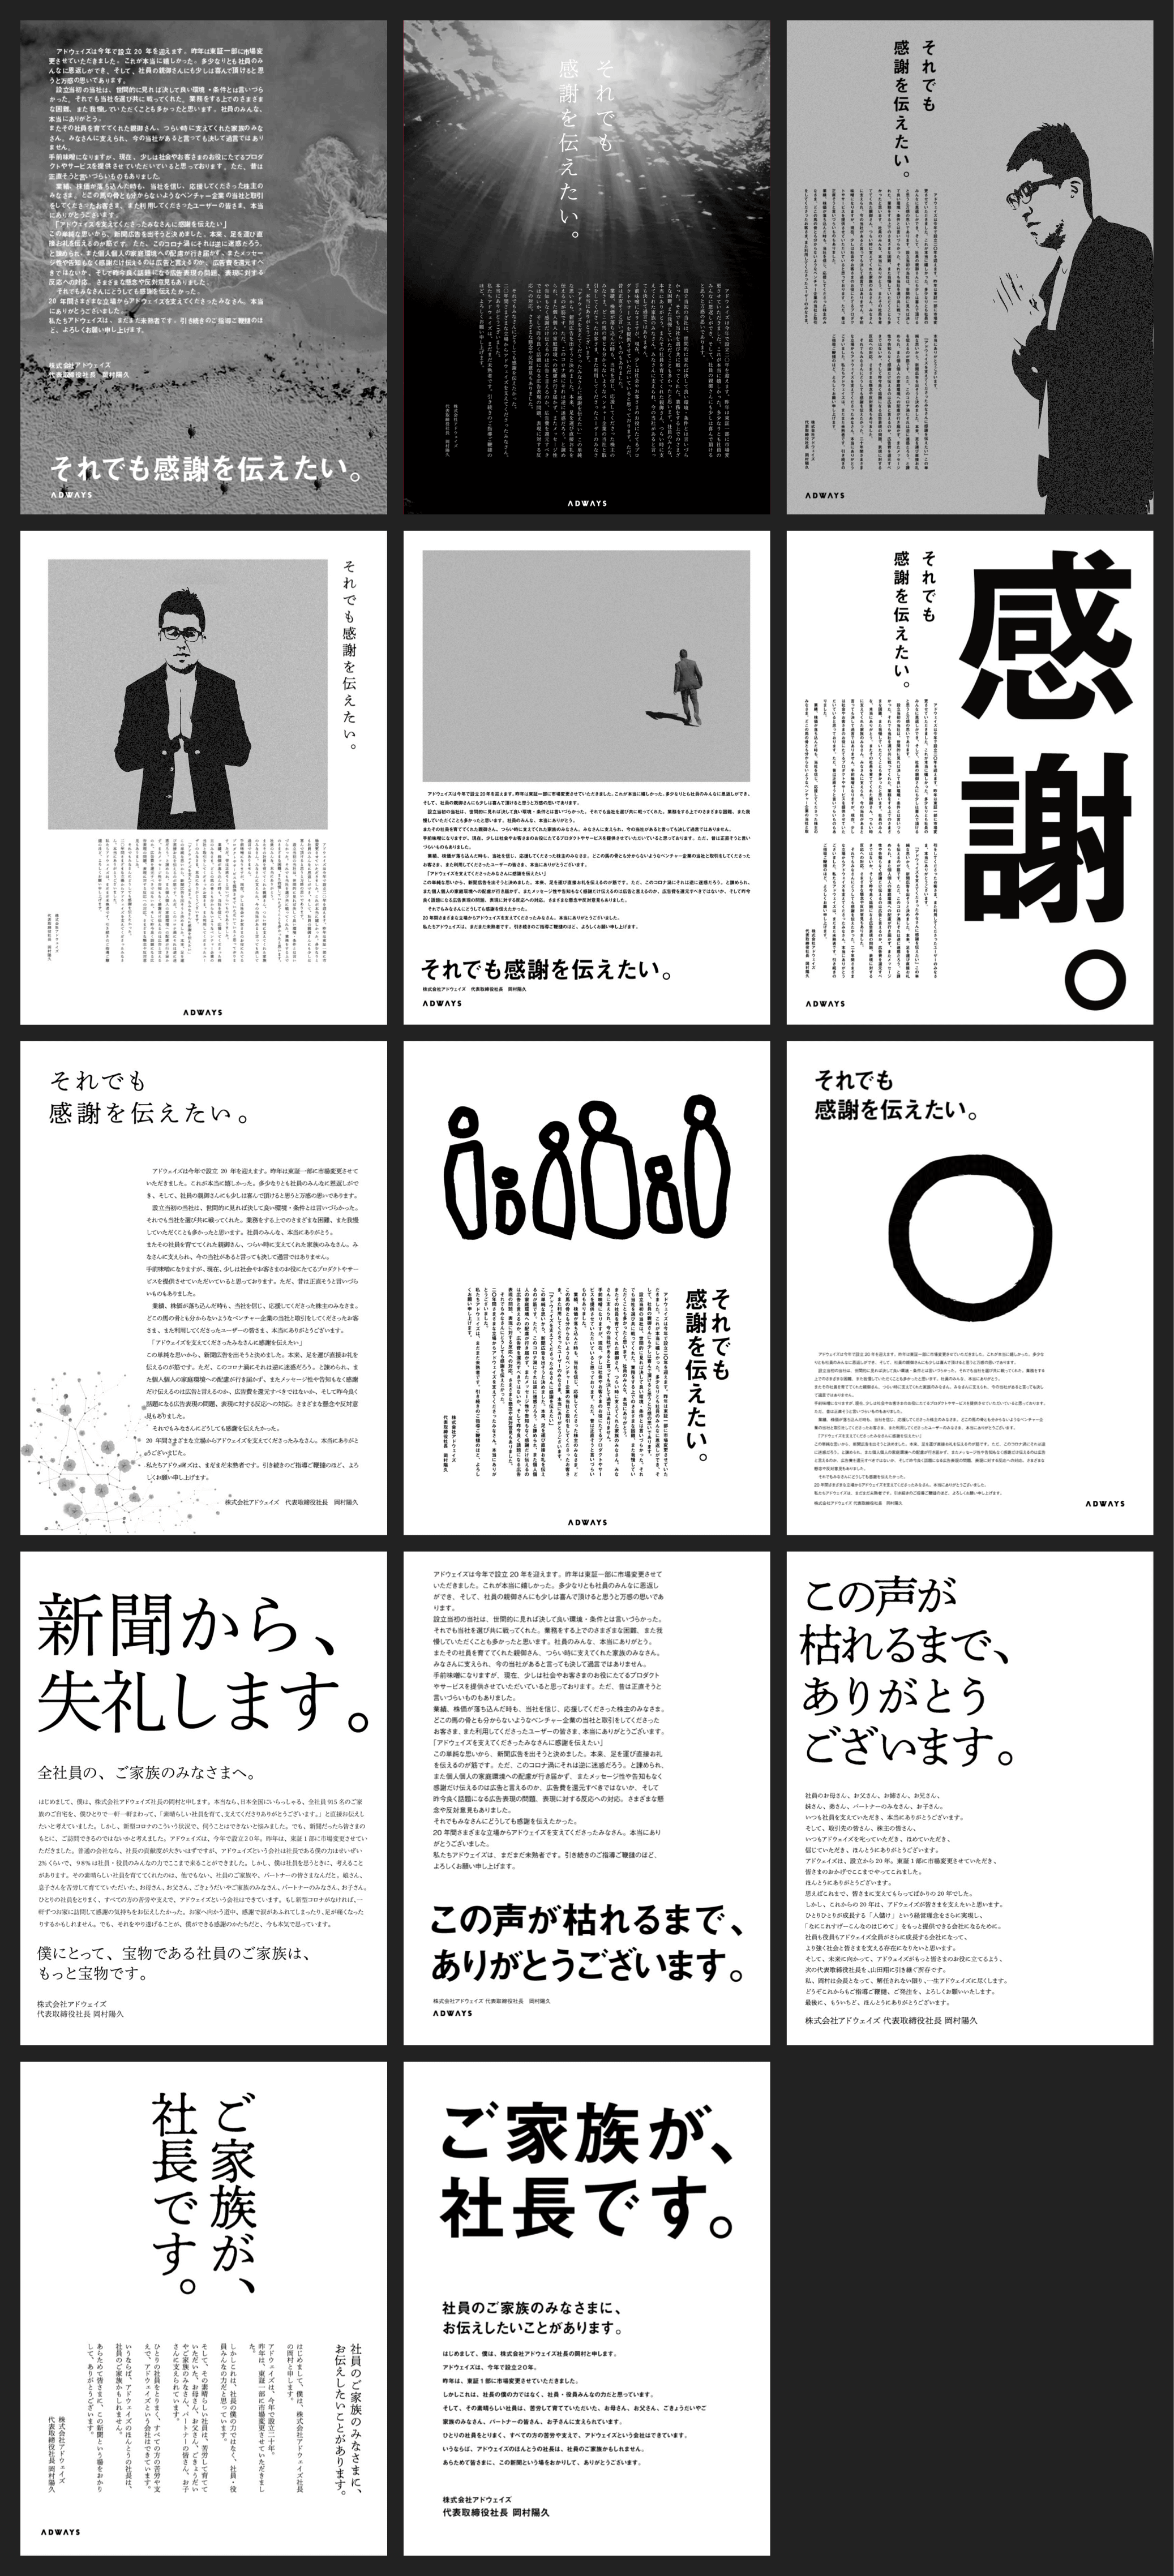 Design [ Second draft ]